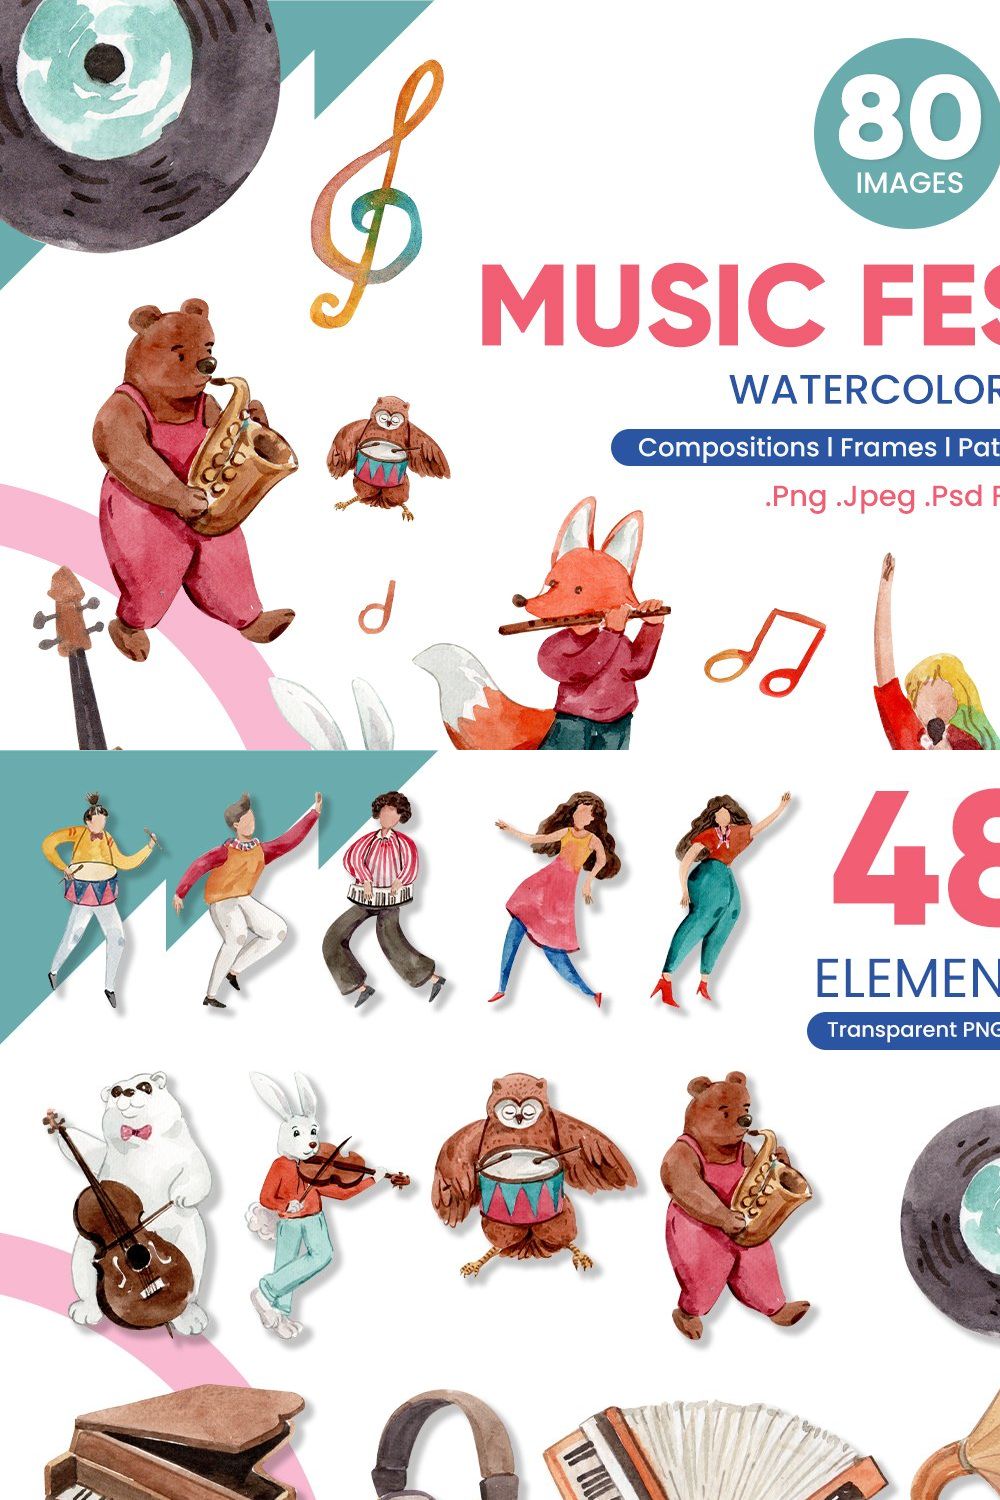 Music Festival Watercolor pinterest preview image.